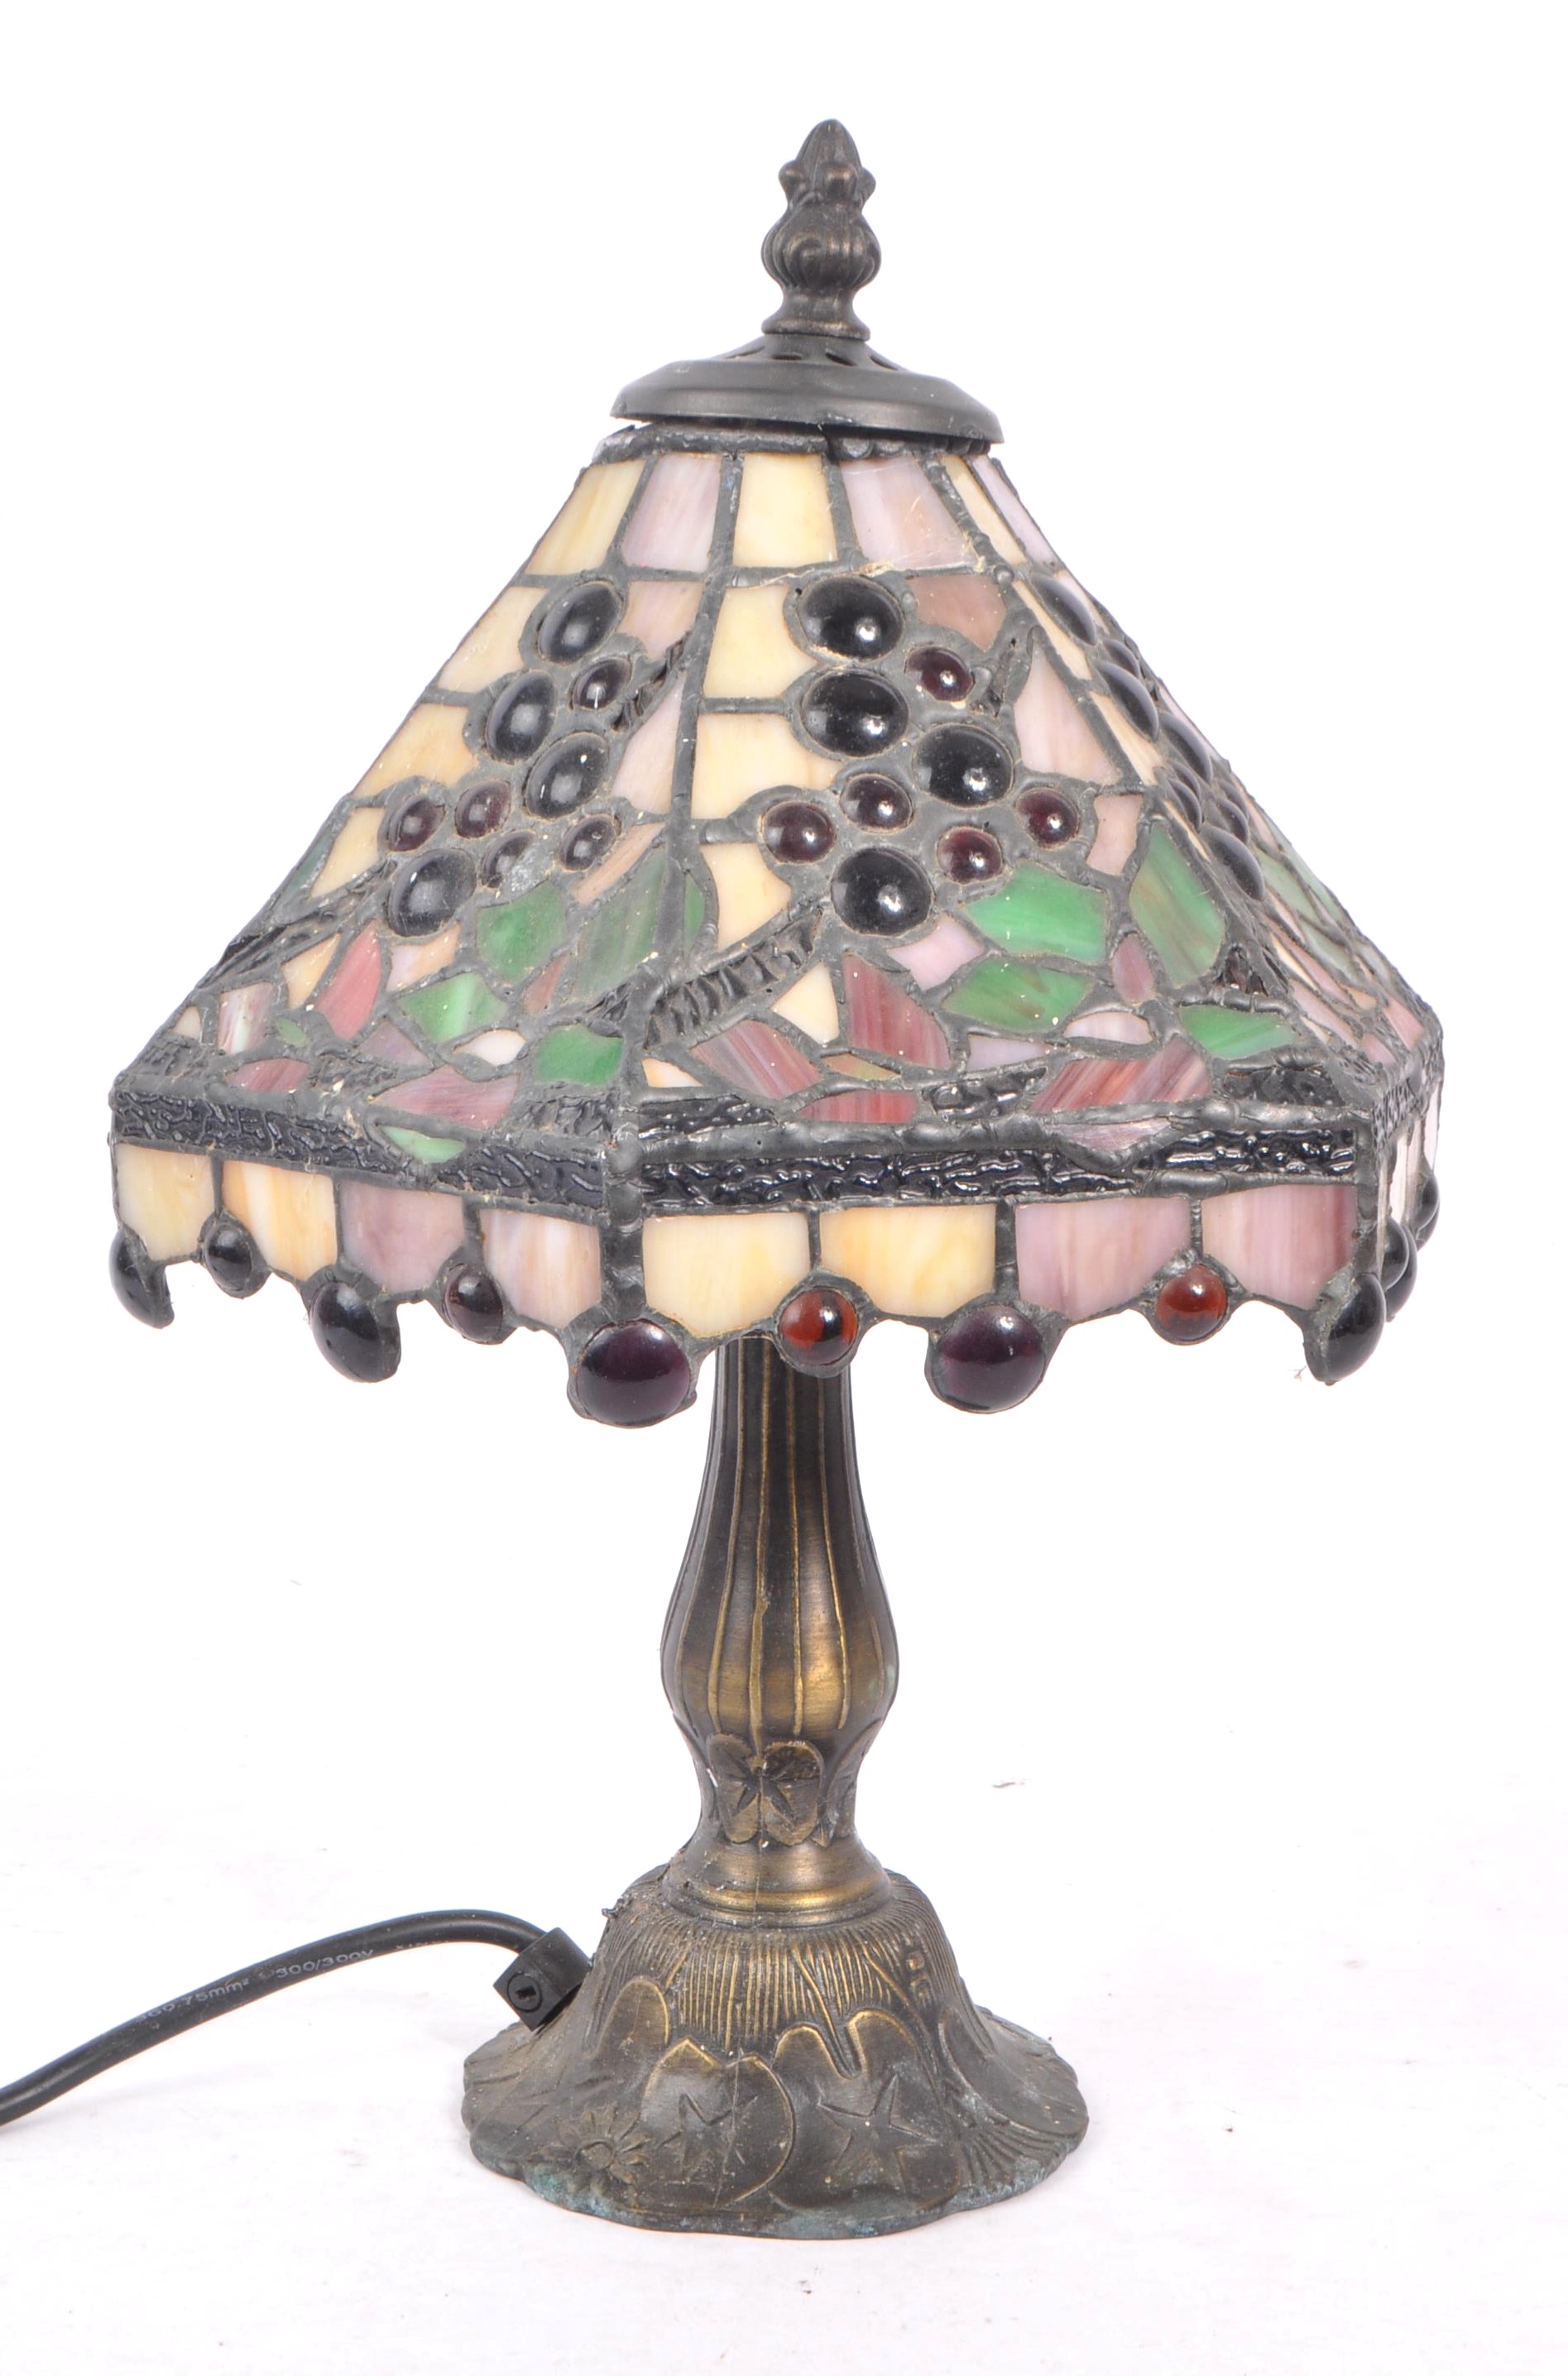 VINTAGE 20TH CENTURY ART NOUVEAU TIFFANY STYLE TABLE LAMP